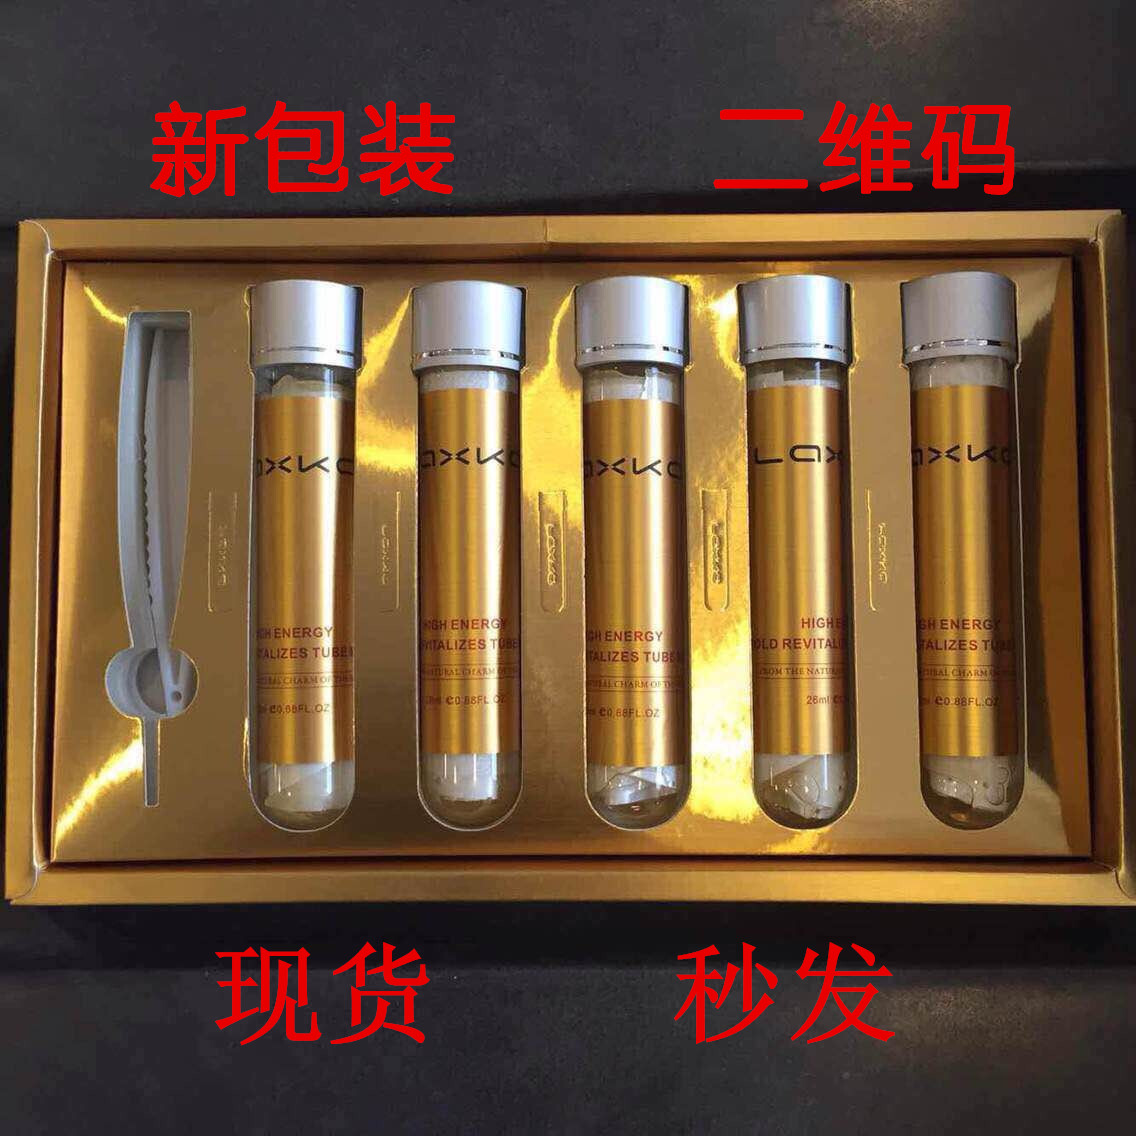 LaXKa/纳丝卡尔 黄金日本384蚕丝试管面膜 美白保湿补水淡化痘印